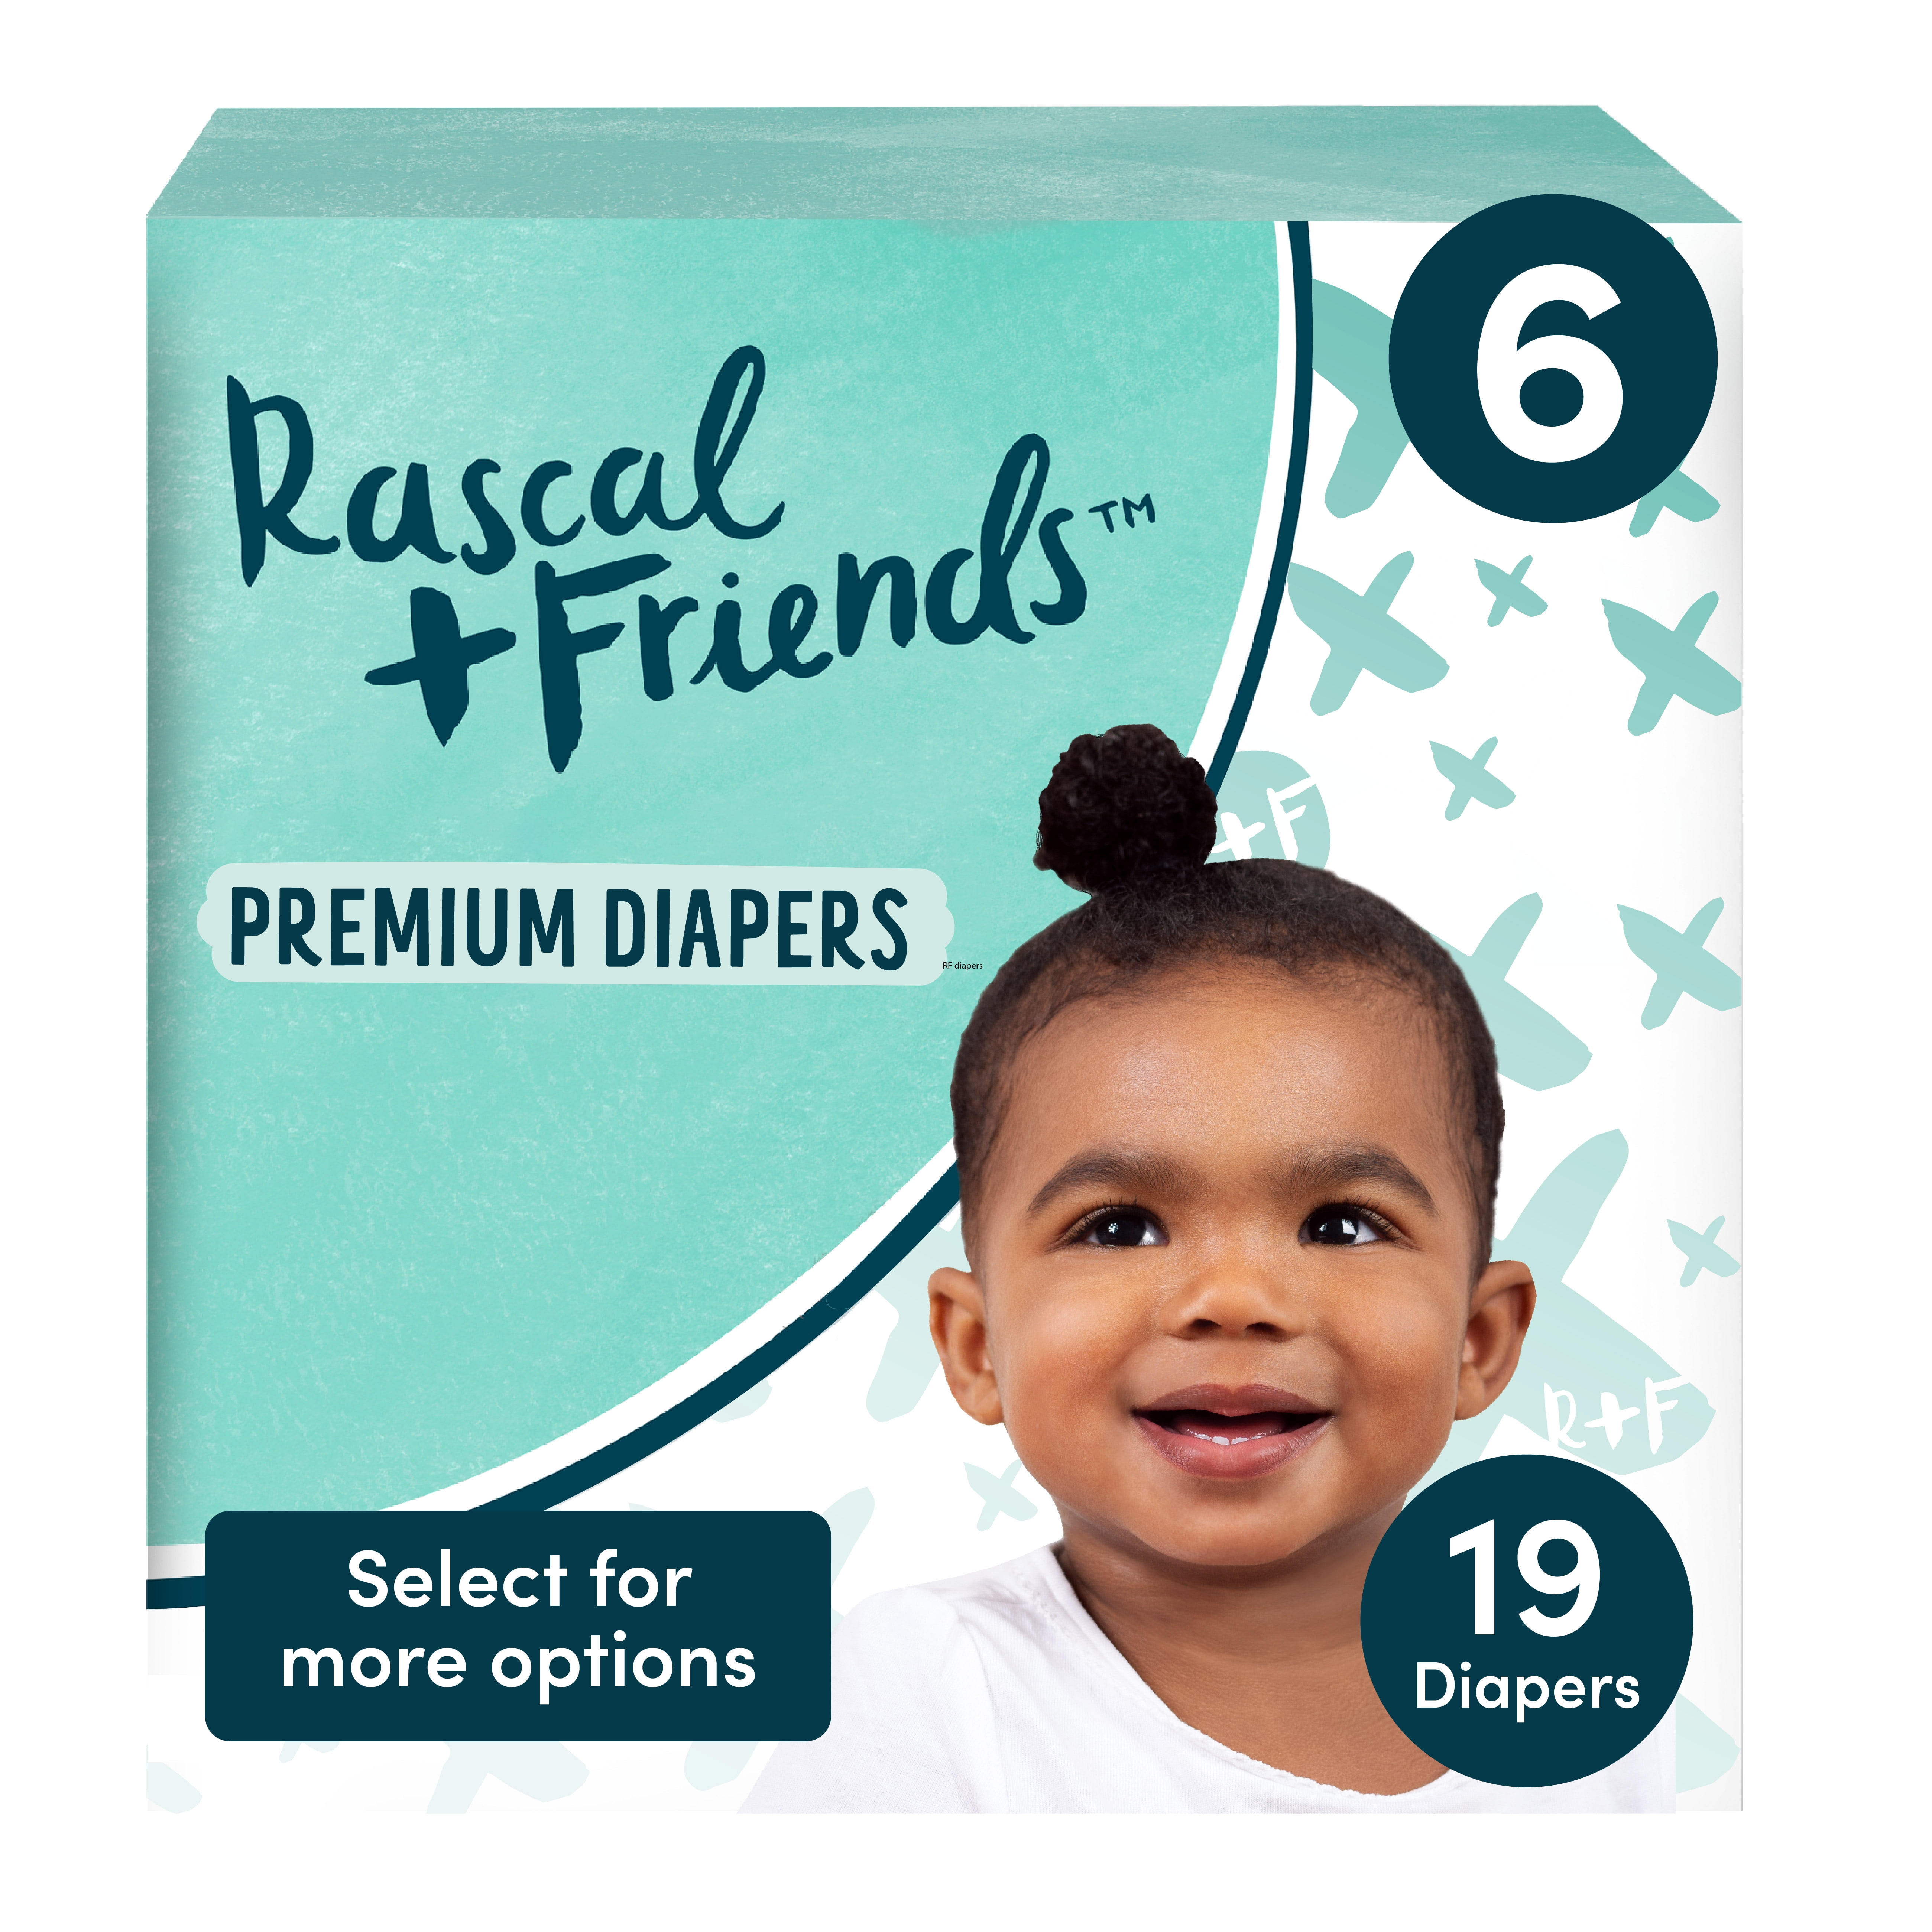 Rascal + Friends Premium Diapers, Size 6 